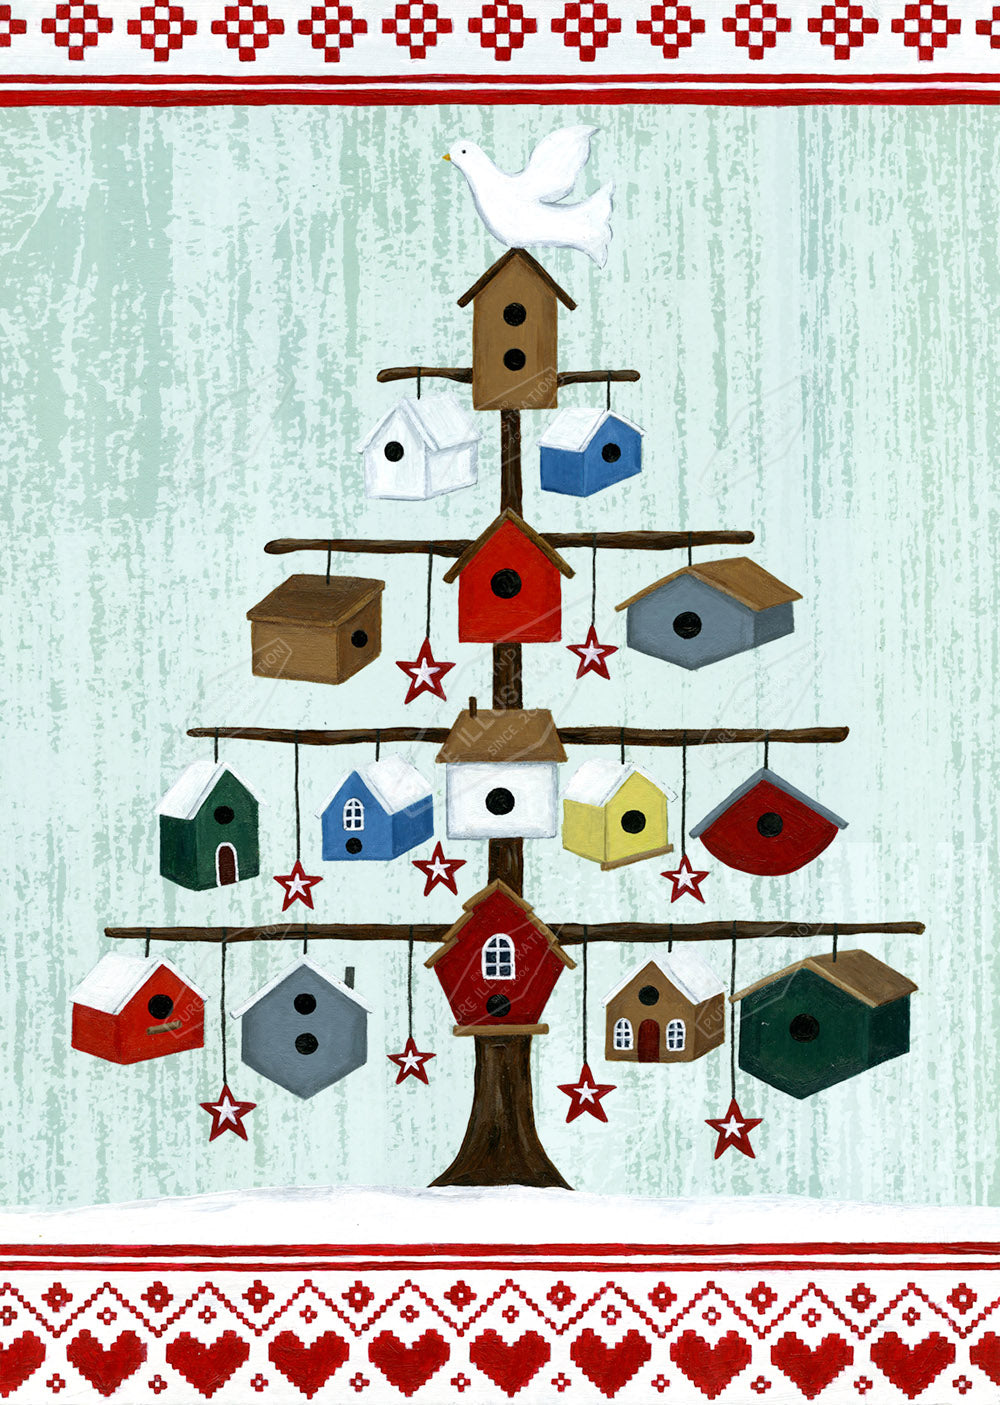 00026860AAI - New England Birdhouse Christmas Tree by Anna Aitken - Pure Art Licensing Agency